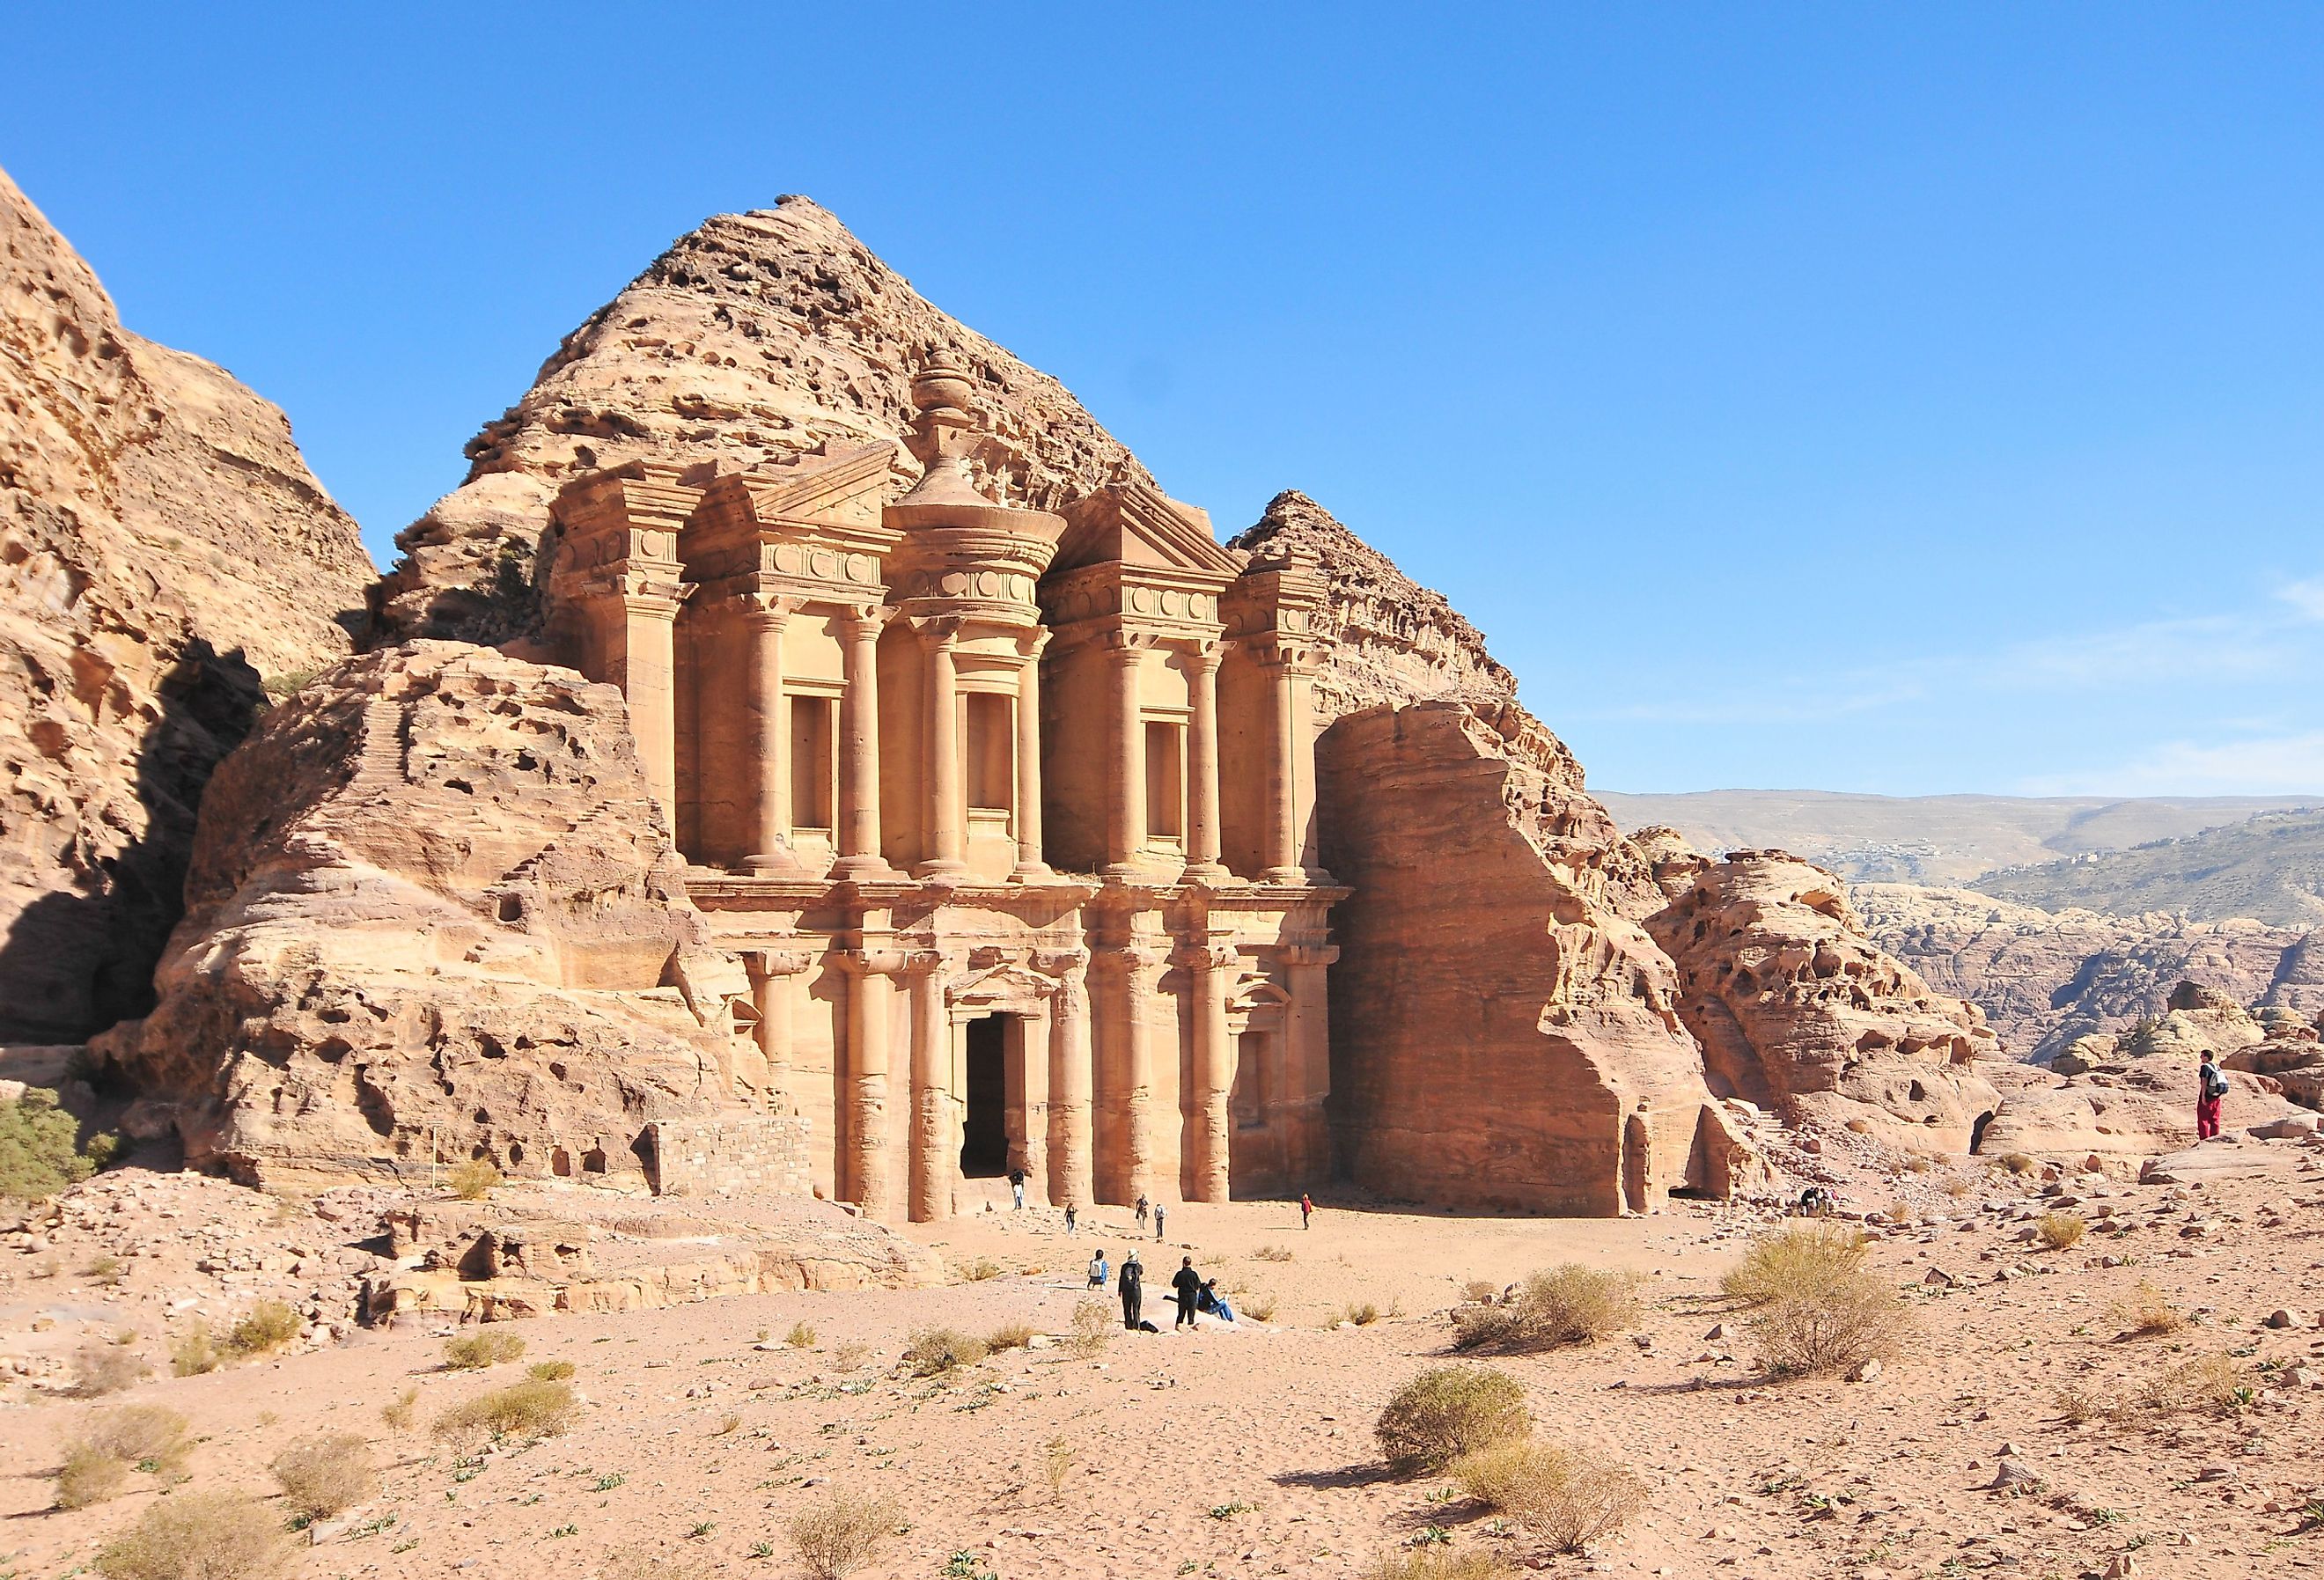 Ad Deir, The Monastery Temple of Petra, Jordan. Image credit Felix Lipov via Shutterstock